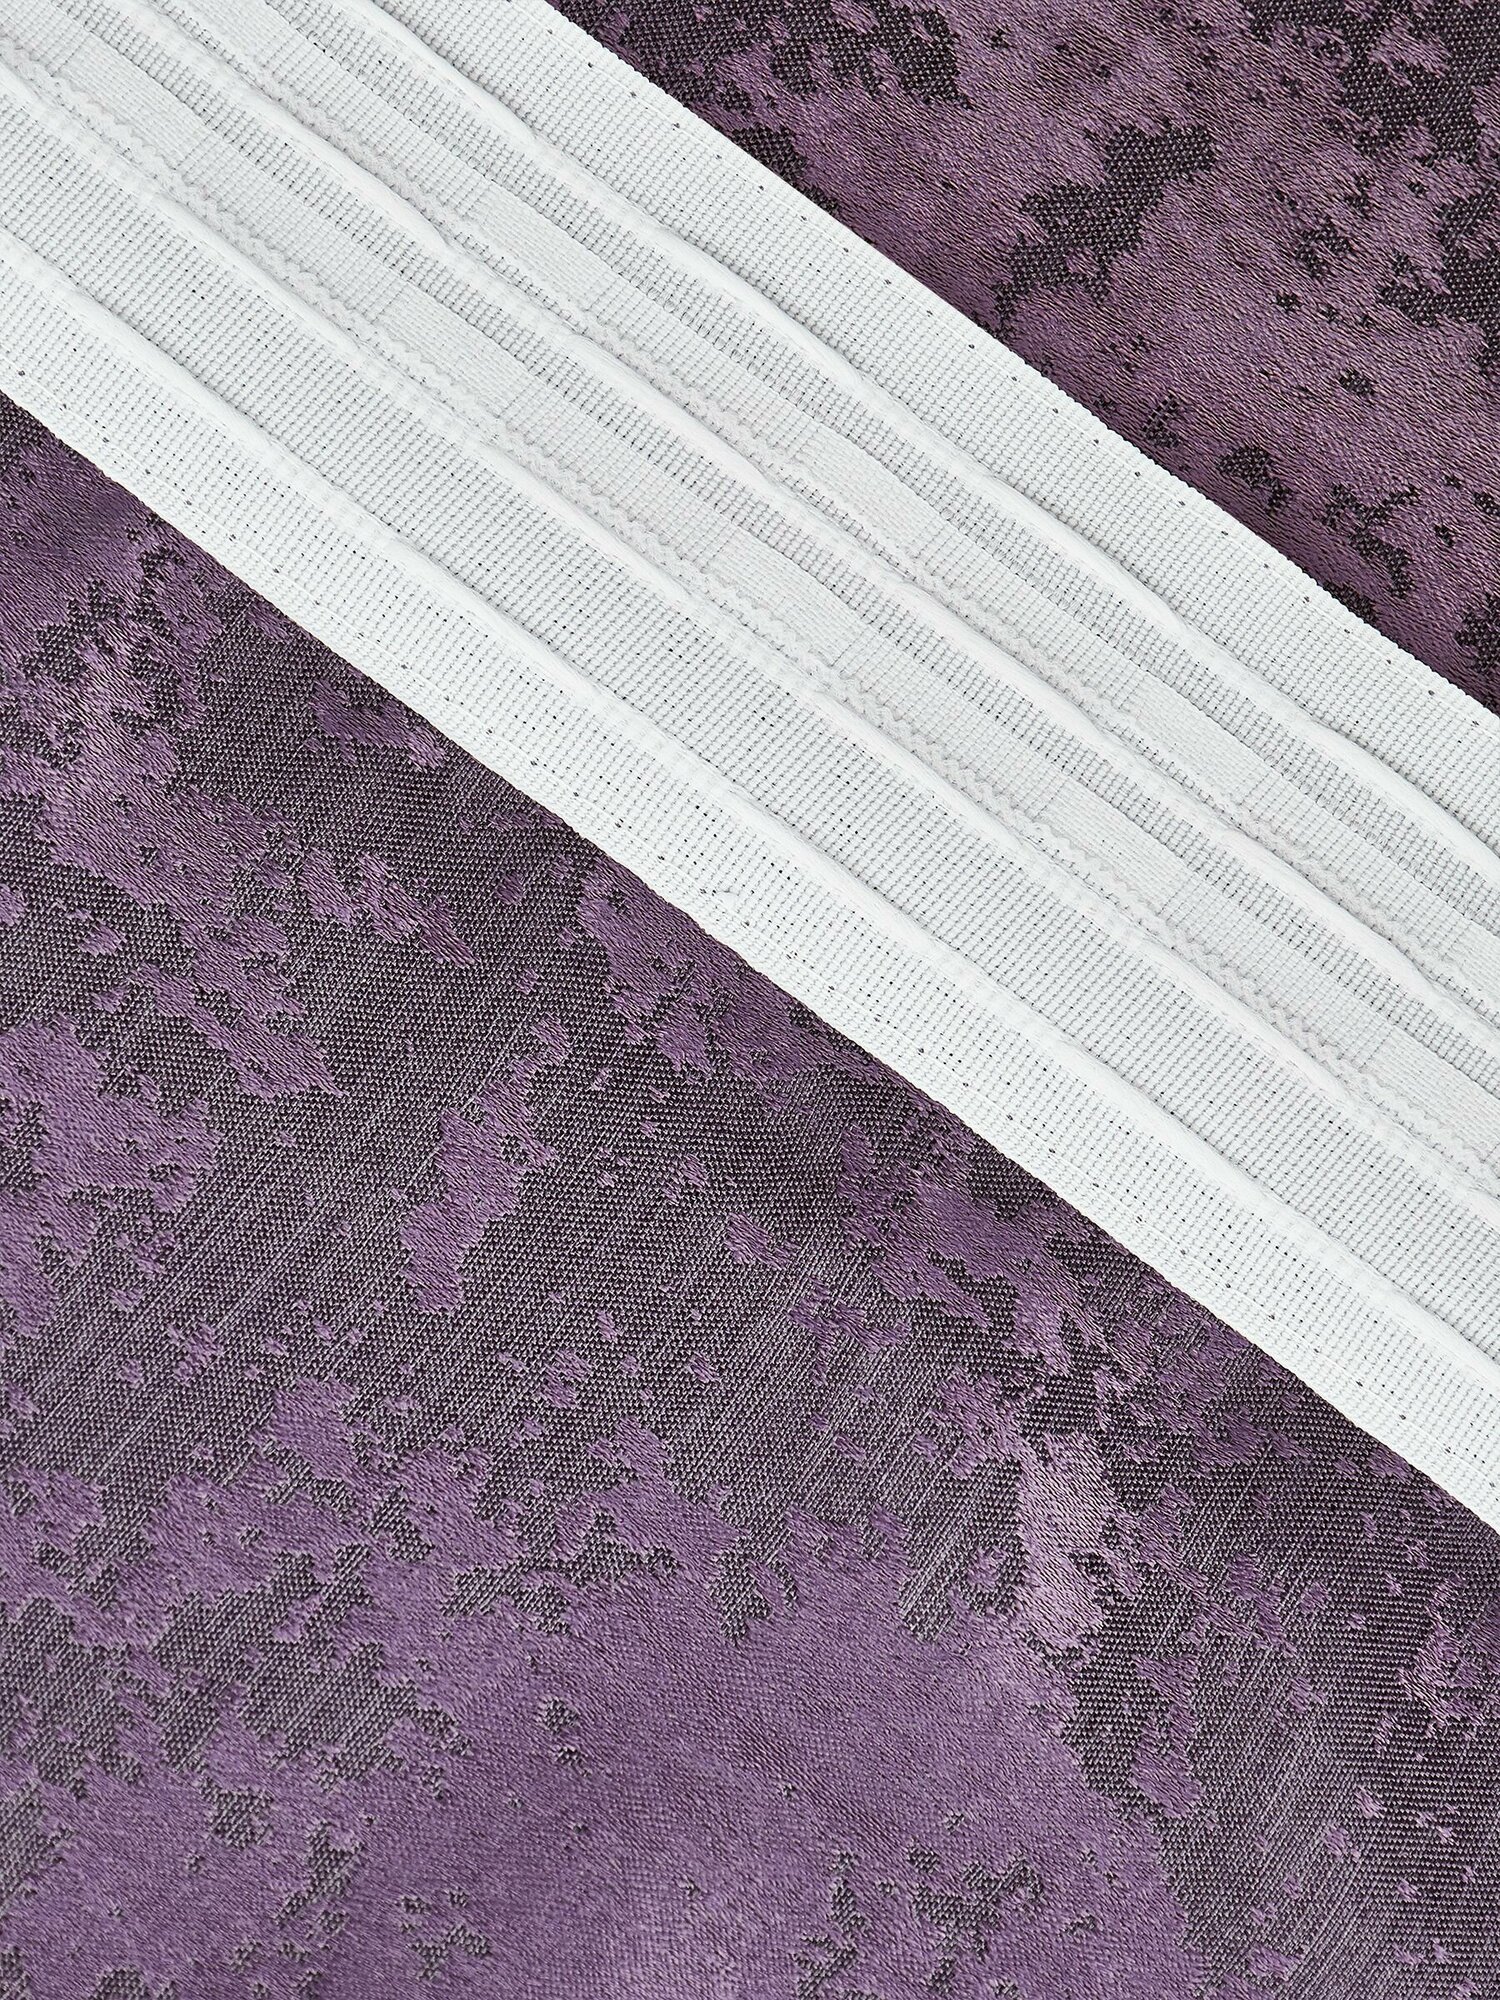 Шторы Мрамор 300х240, фиолетовые, комплект штор 2шт